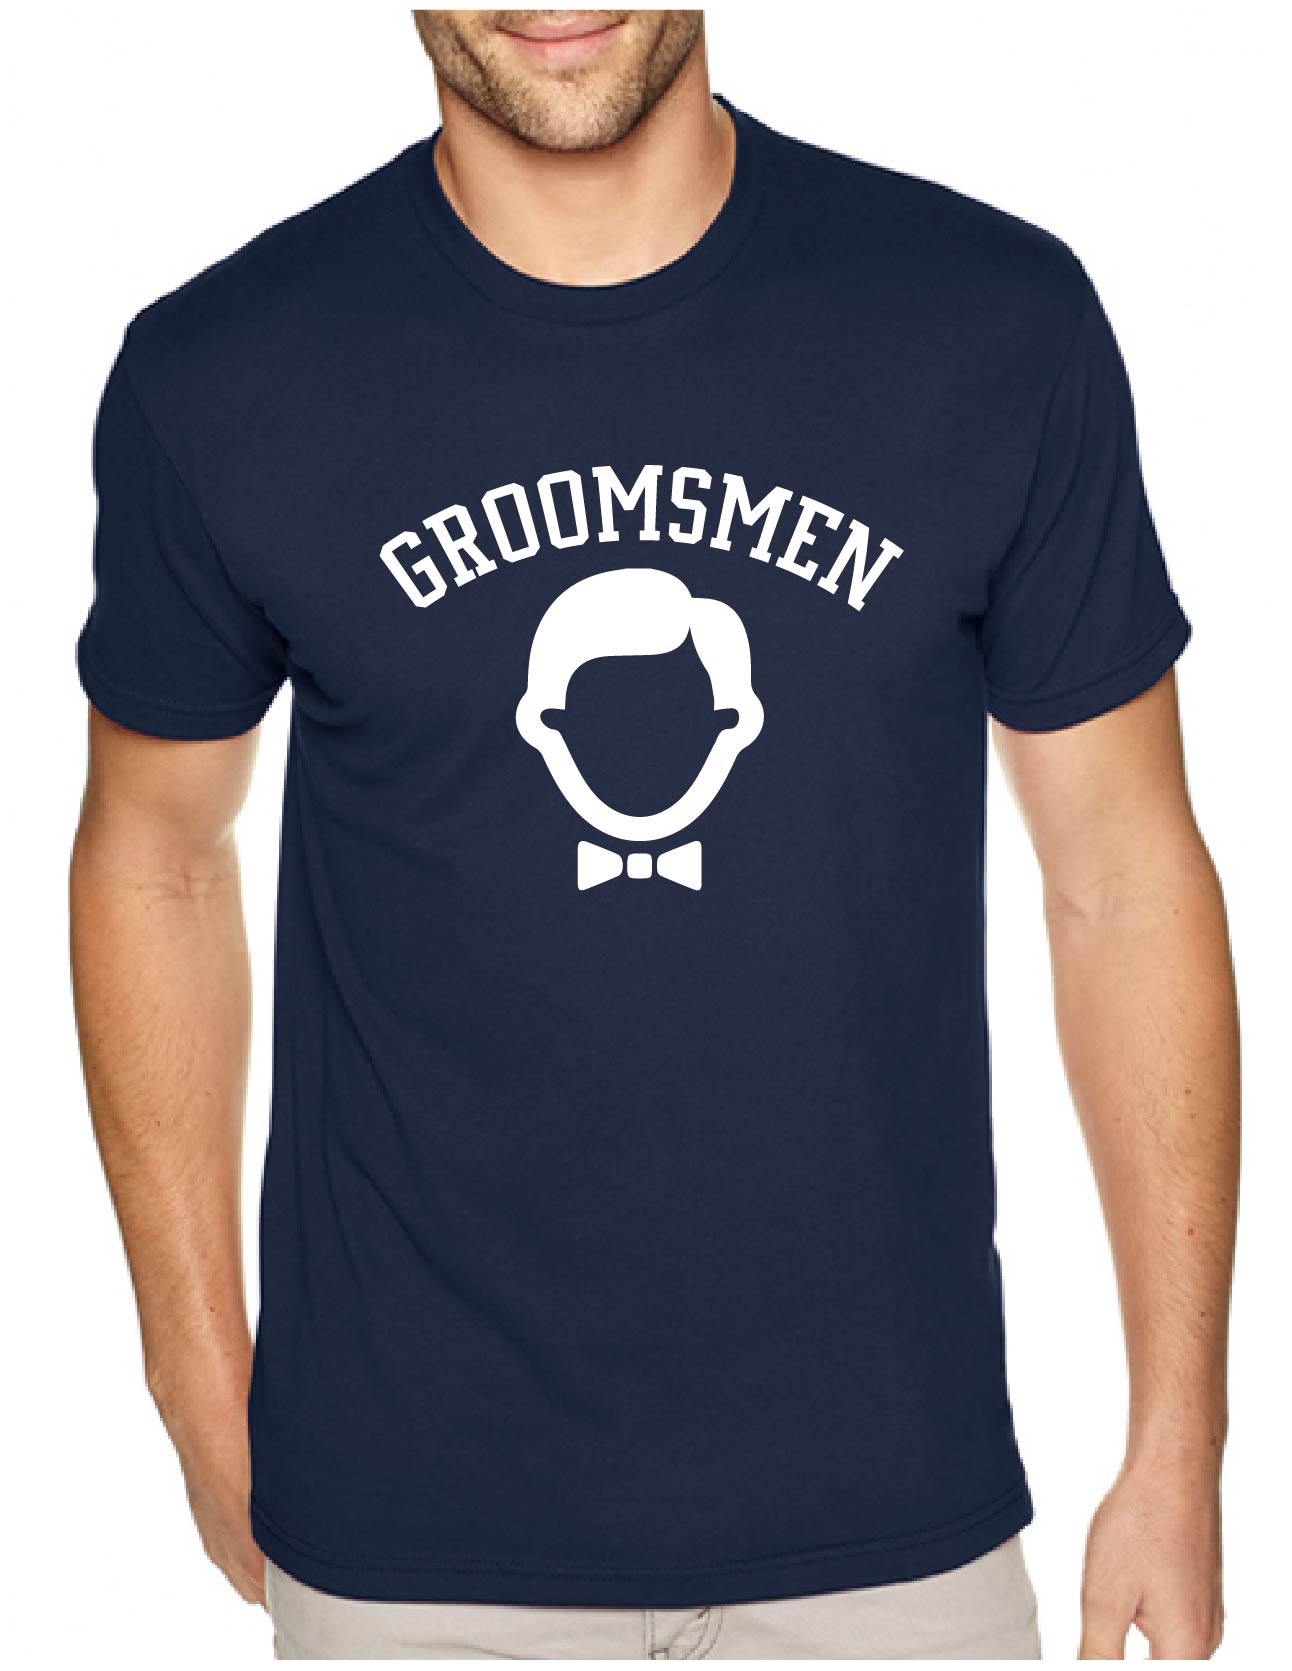 Groomsmen Bow Tie Style Men's Tee (340)